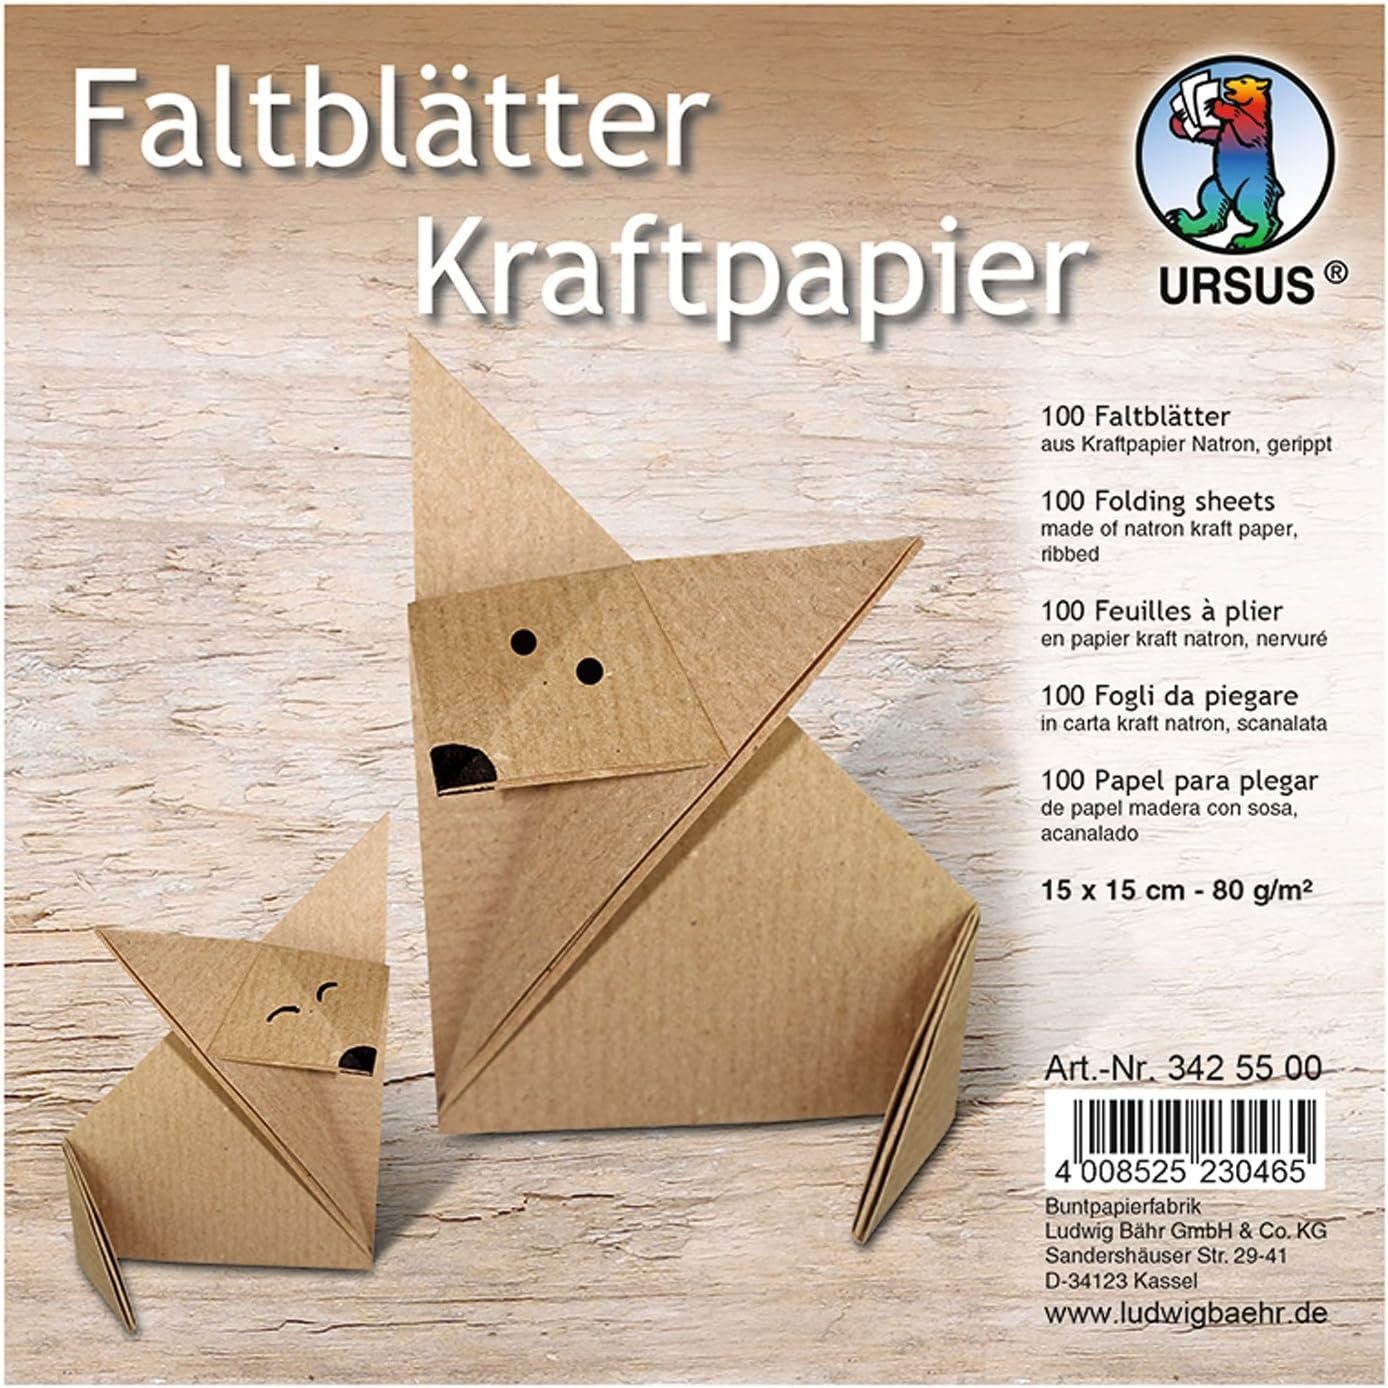 Blatt Kraftpapier Bähr Ludwig 15x15cm 100 Kraftpapier Faltblätter Ursus URSUS - 80g/m²